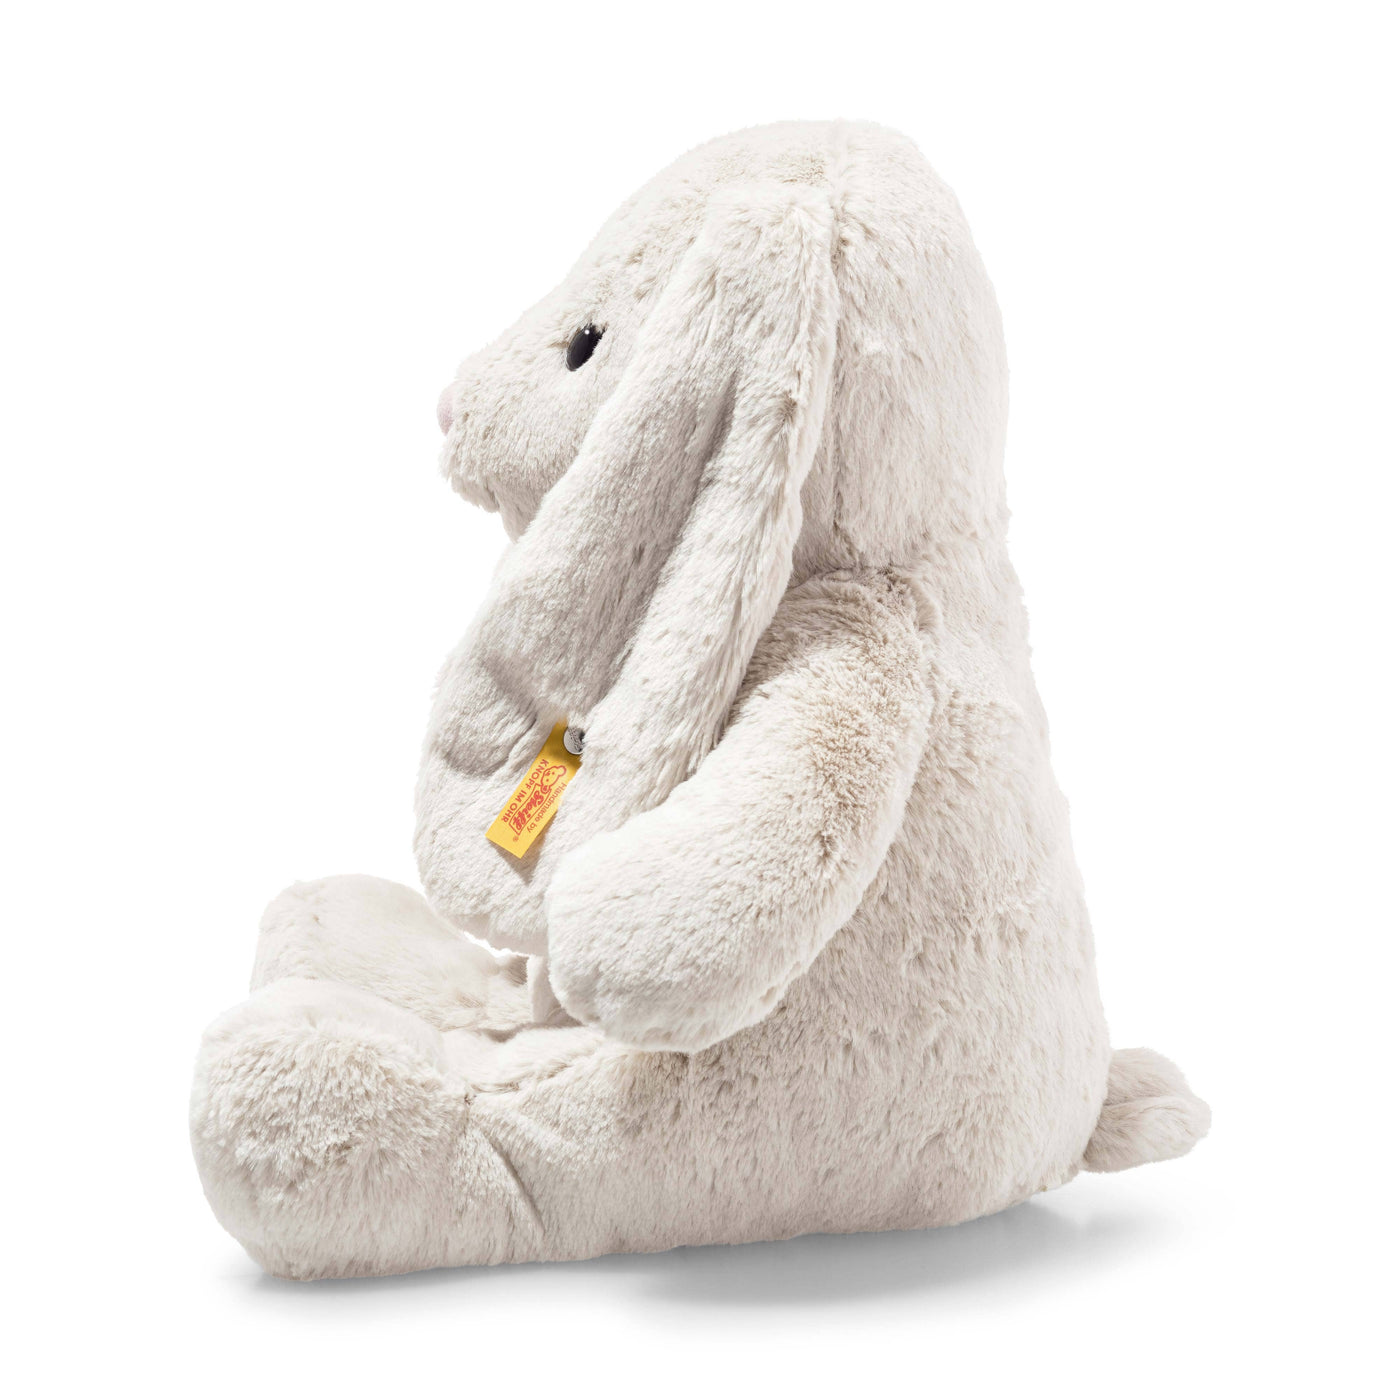 Hoppie Rabbit Plush Animal Toy, 15 Inches